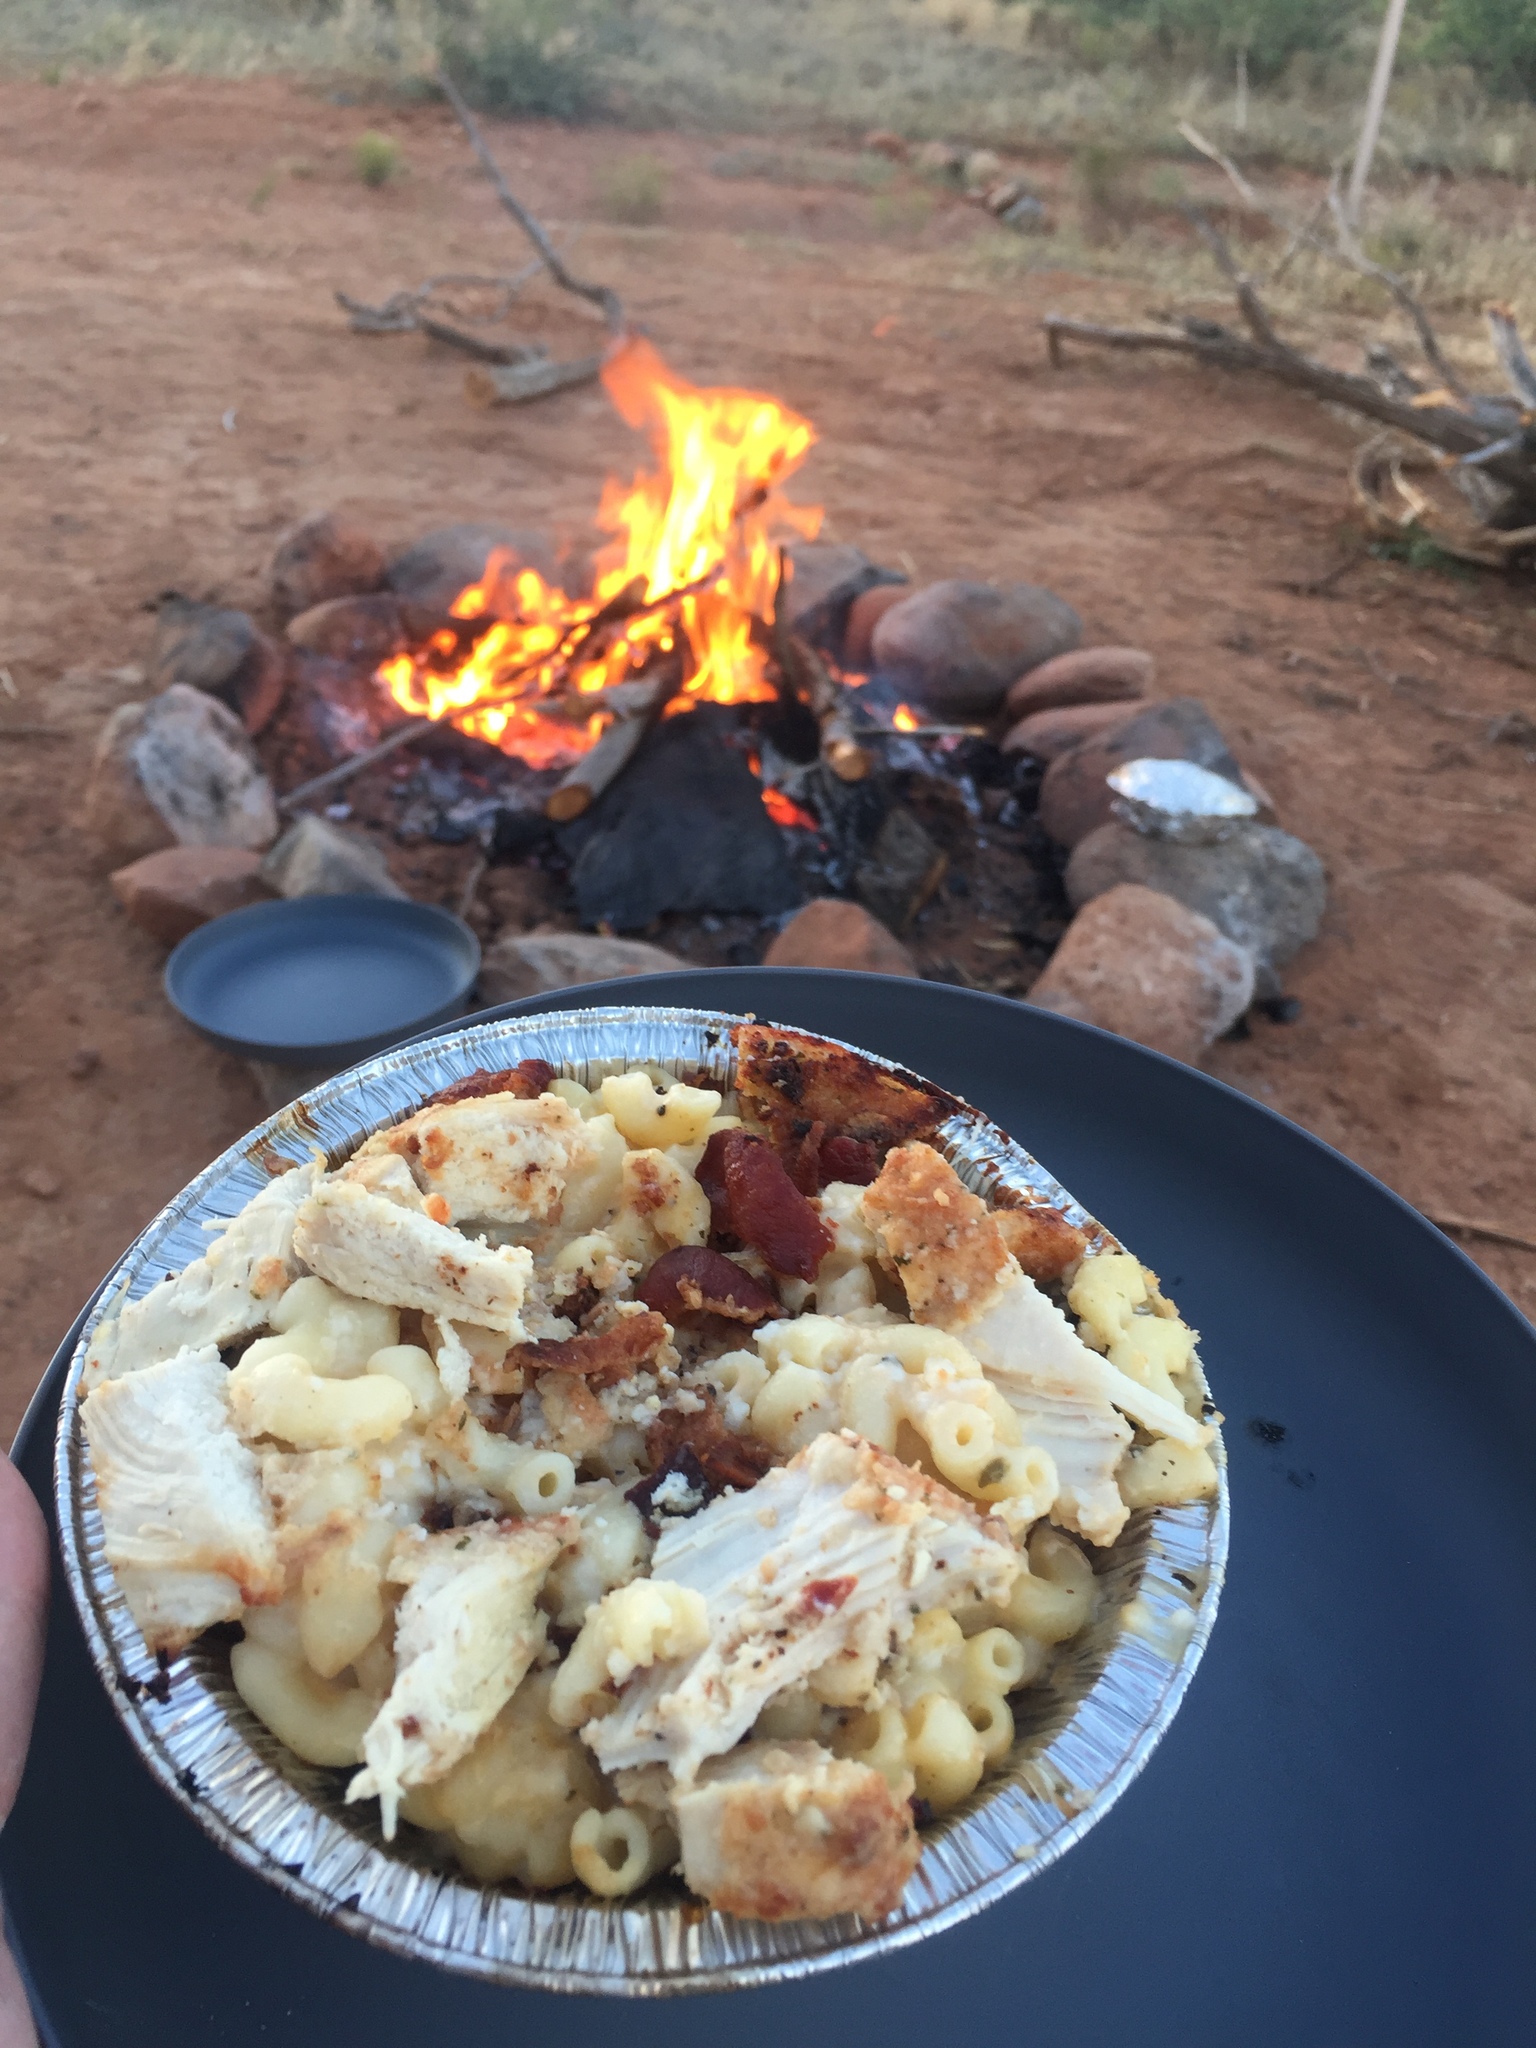 Campfire Food